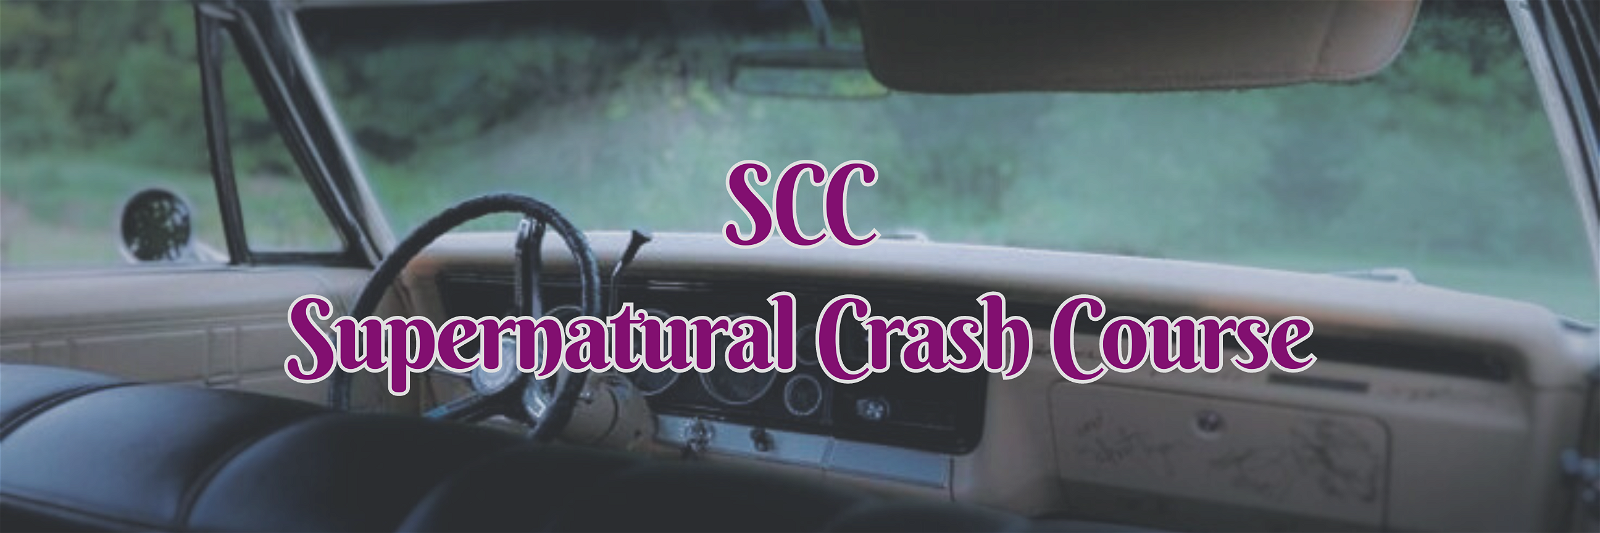 Supernatural Crash Course #2 - Sam Winchester